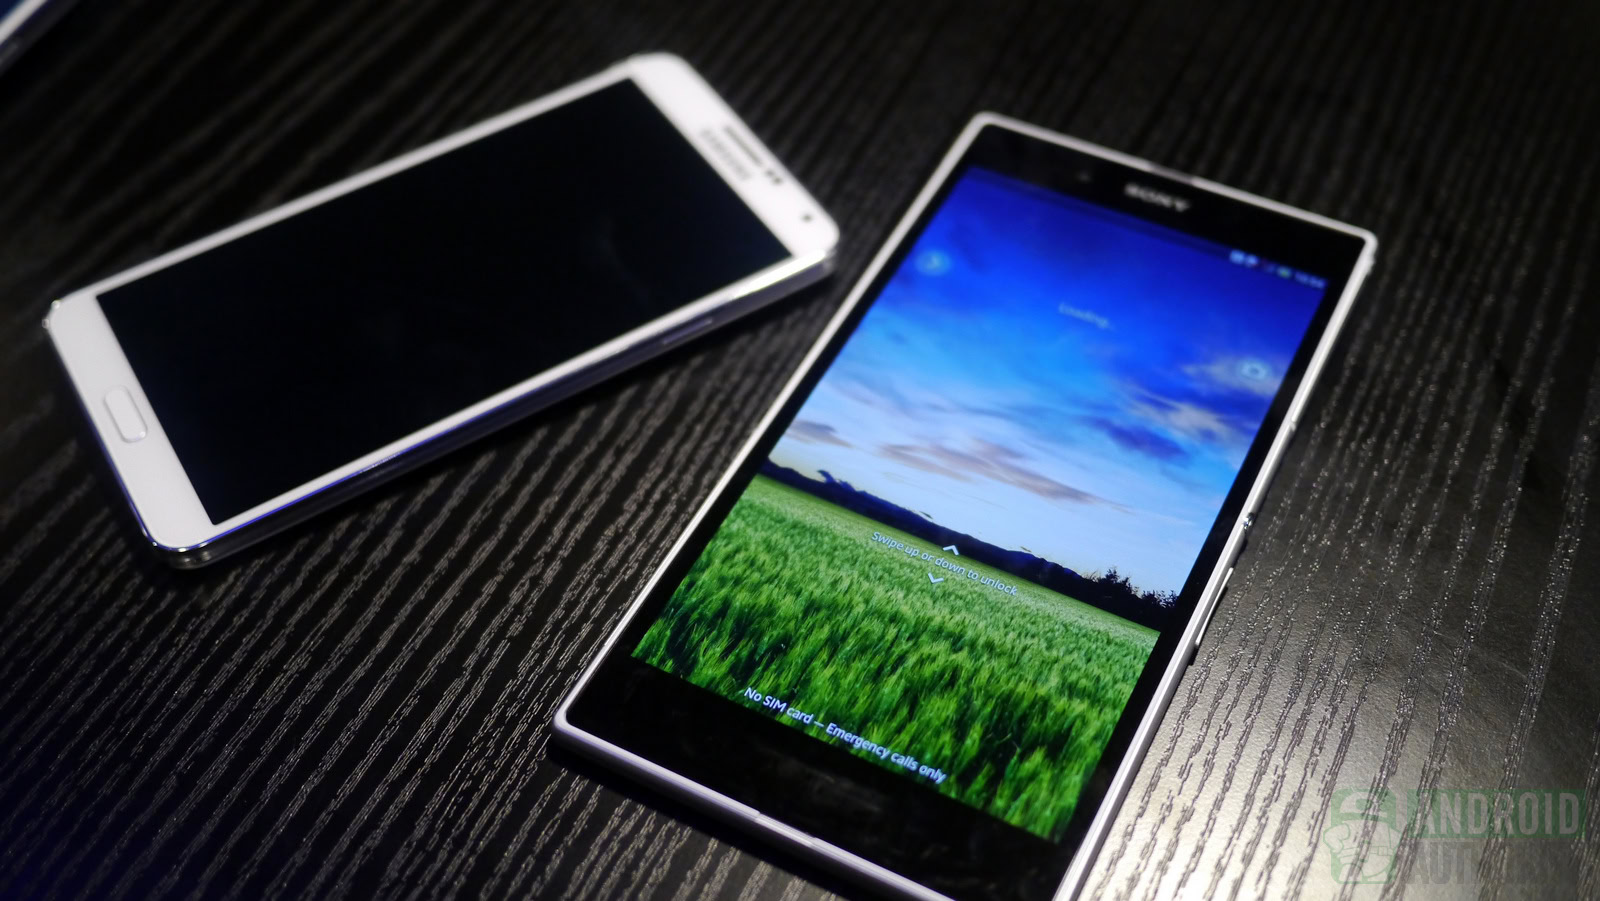 Samsung Galaxy Note 3 xperia z ultra aa (2)